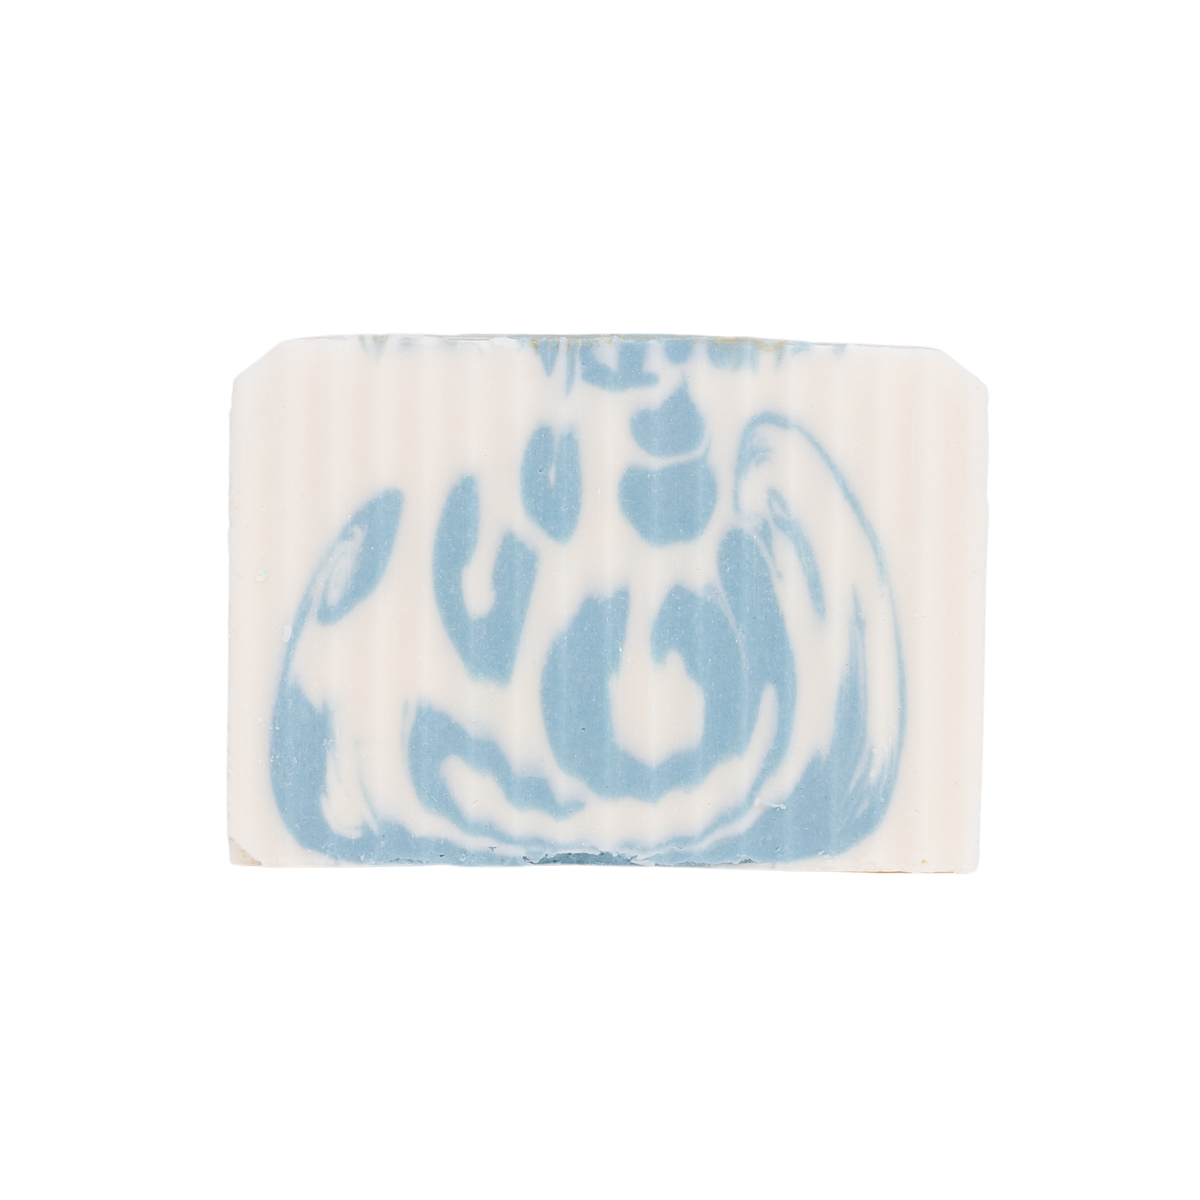 Magnolia Shea Butter Soap